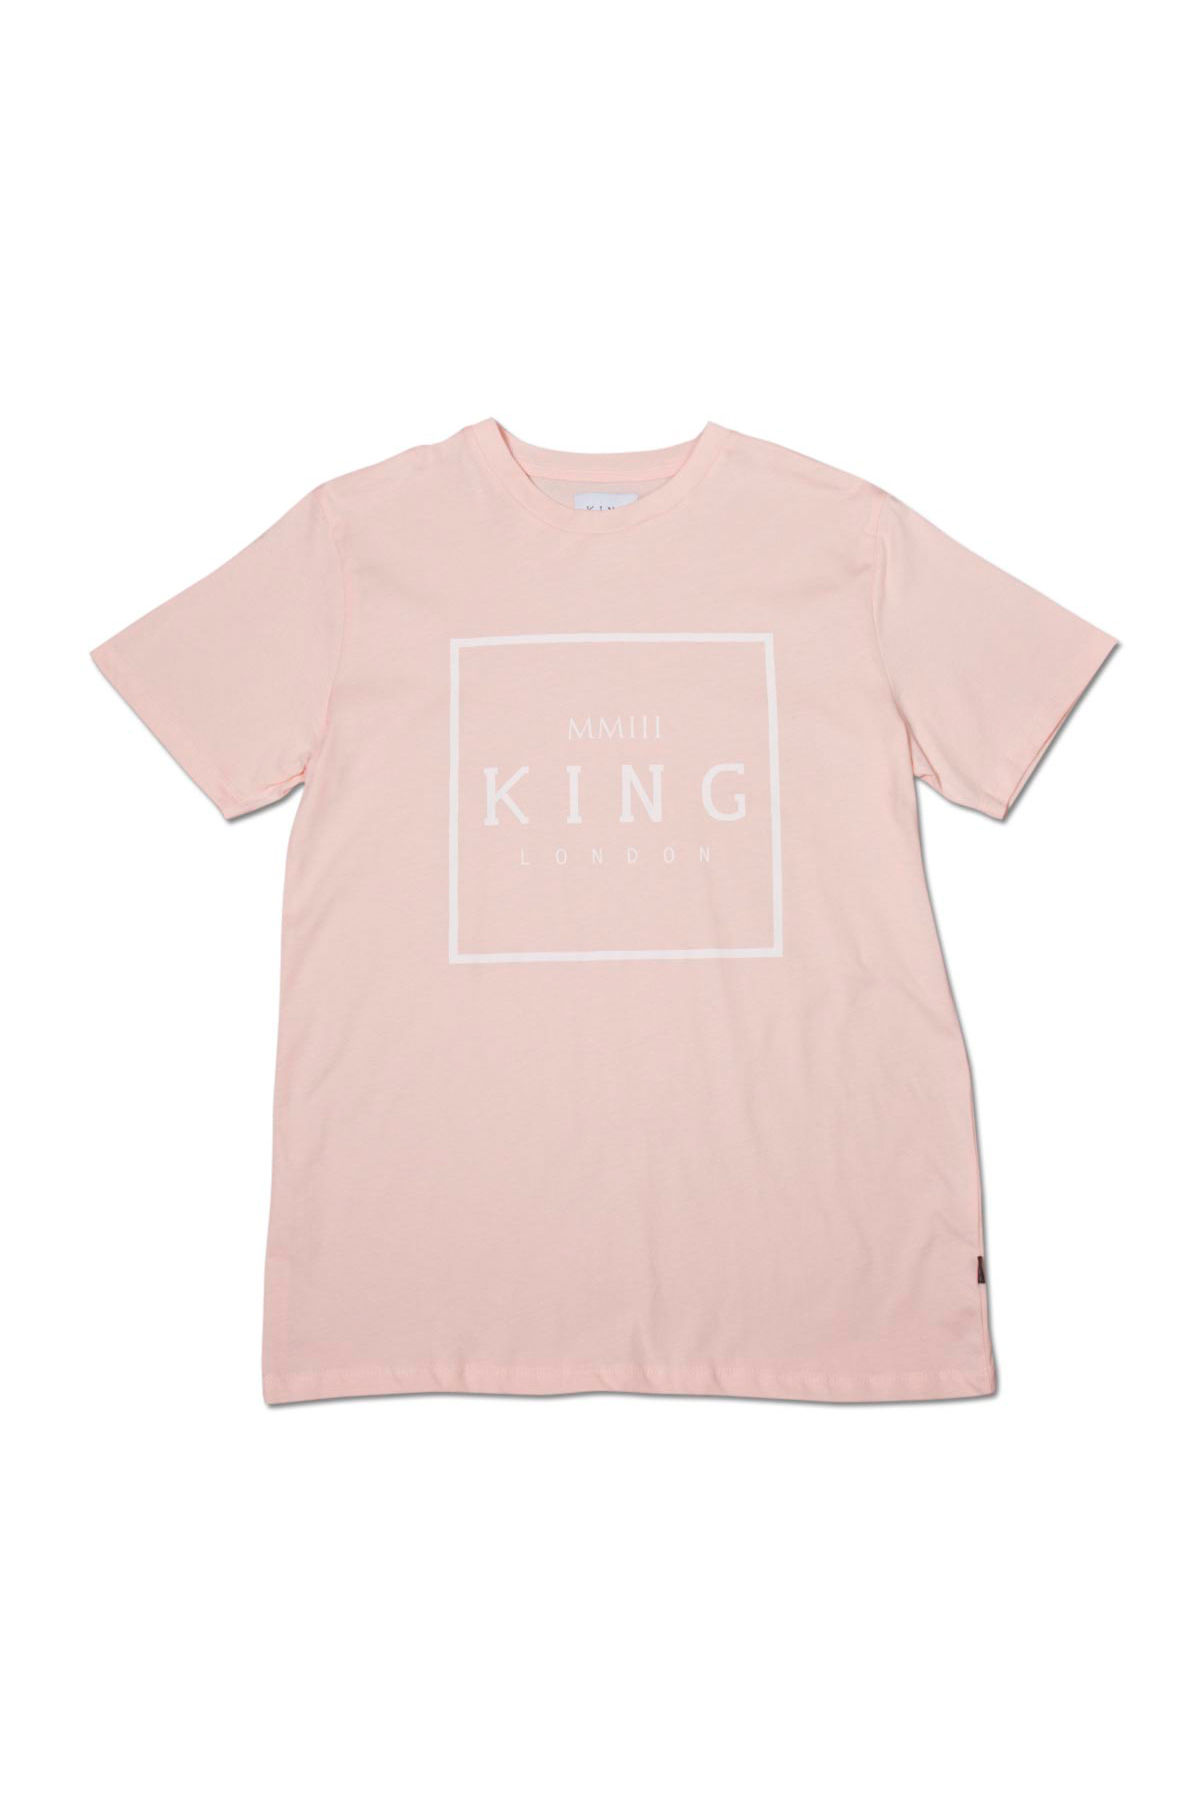 XL 3XL M 2XL NUOVO L King Apparel selezionare T-Shirt-Blush-S 